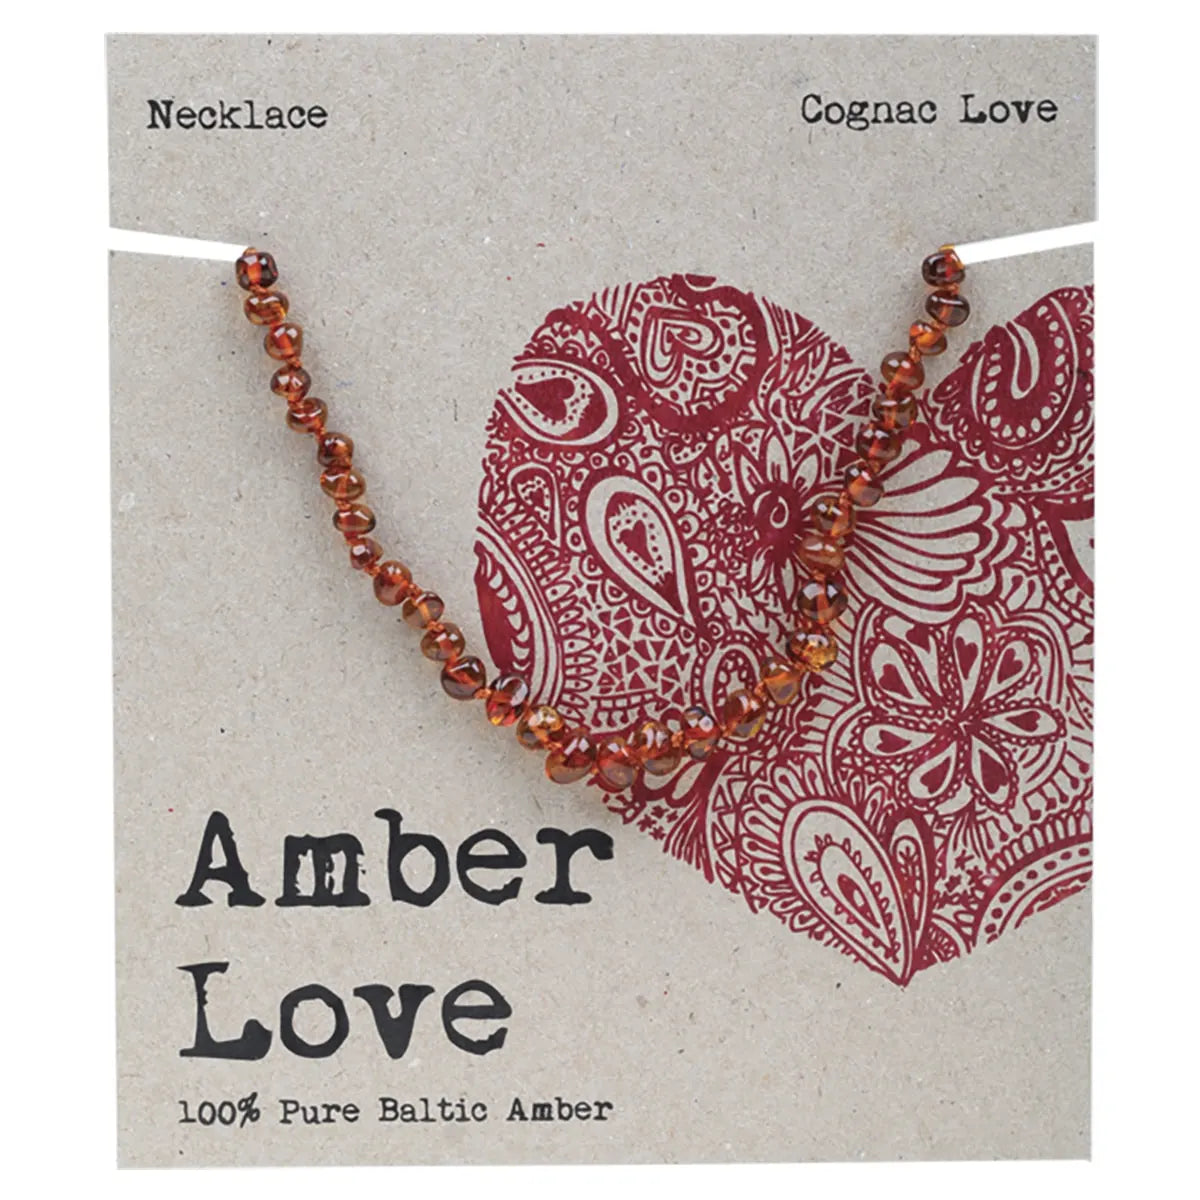 Amber Love Children's Necklace // 100% Baltic Amber // Cognac